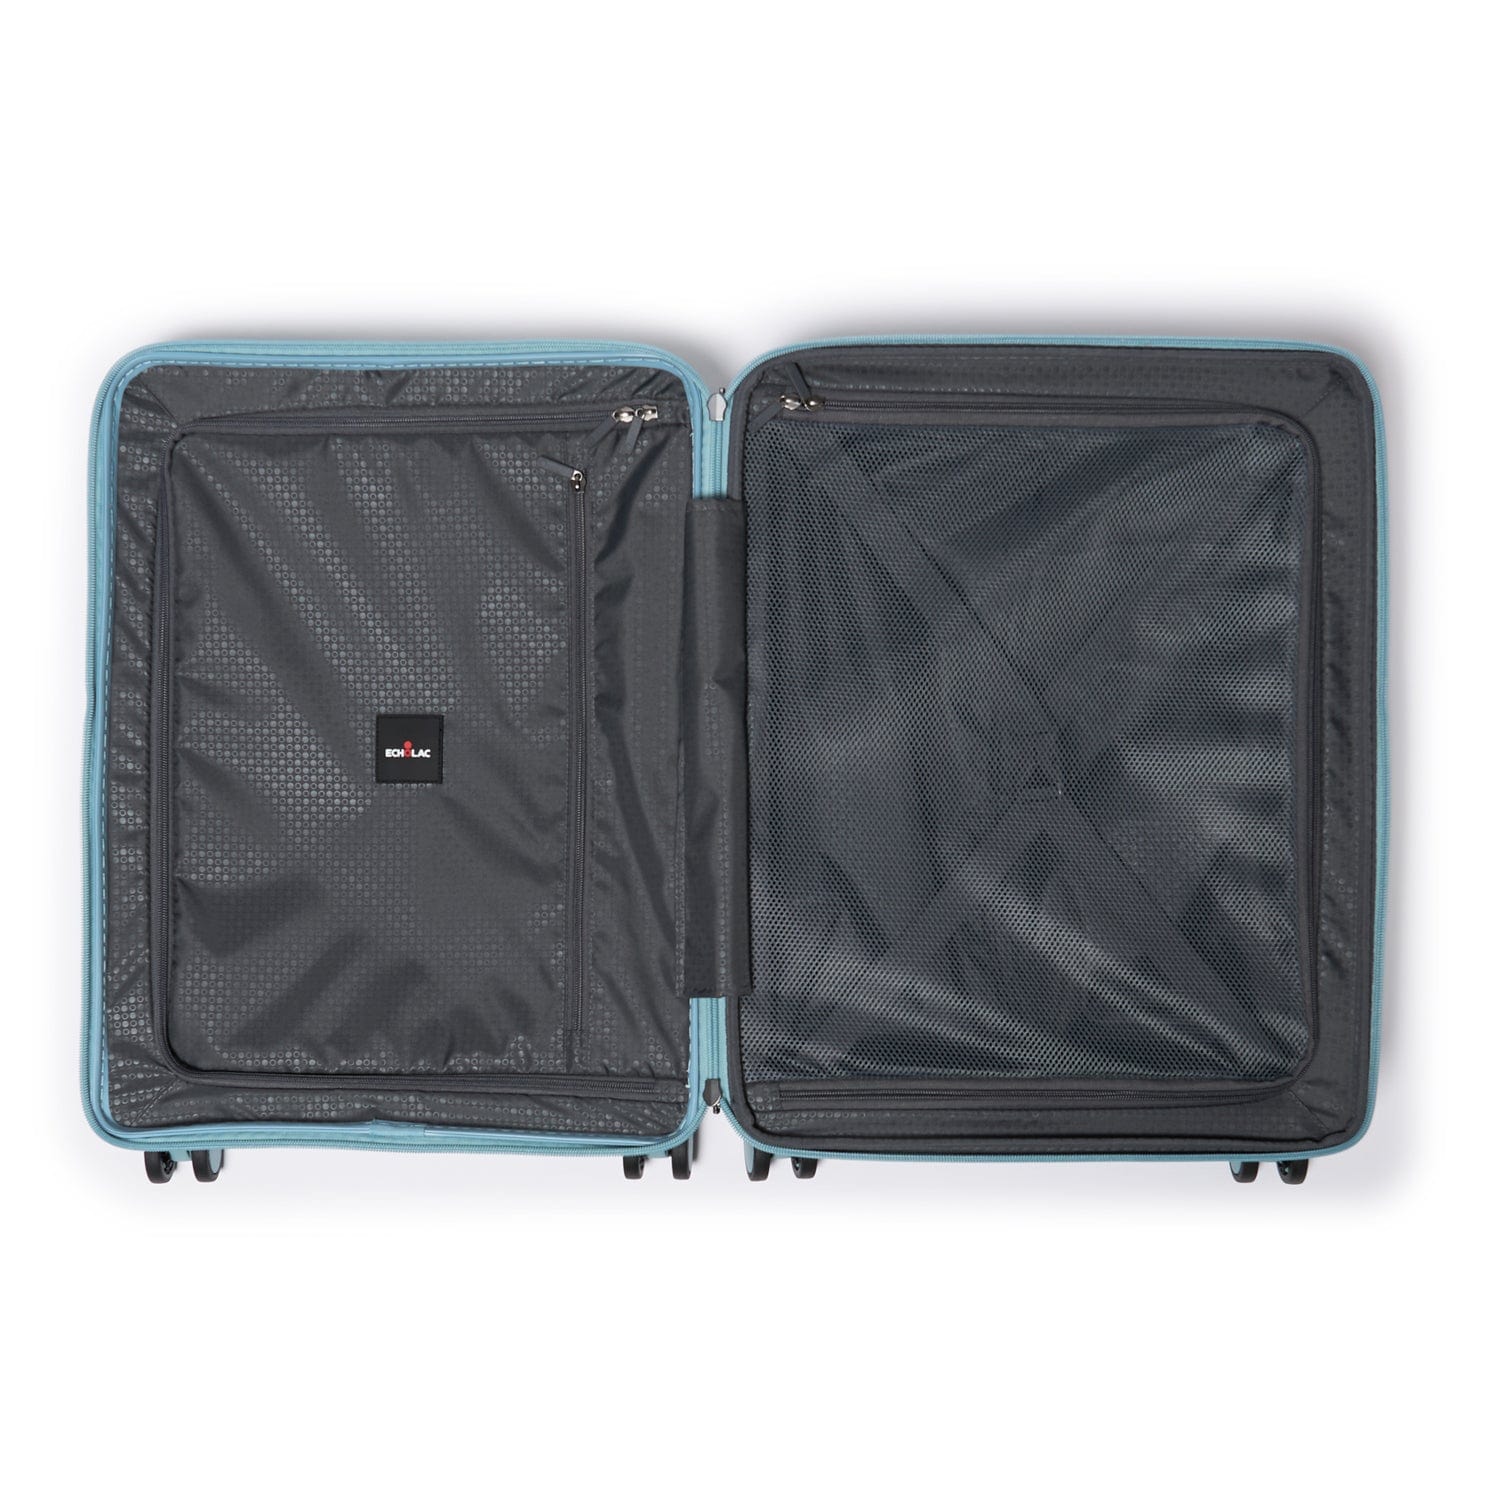 Echolac Pusion 55cm Hardcase Expandable 4 Double Wheel Cabin Luggage Trolley Blue - PW005 20 Blue